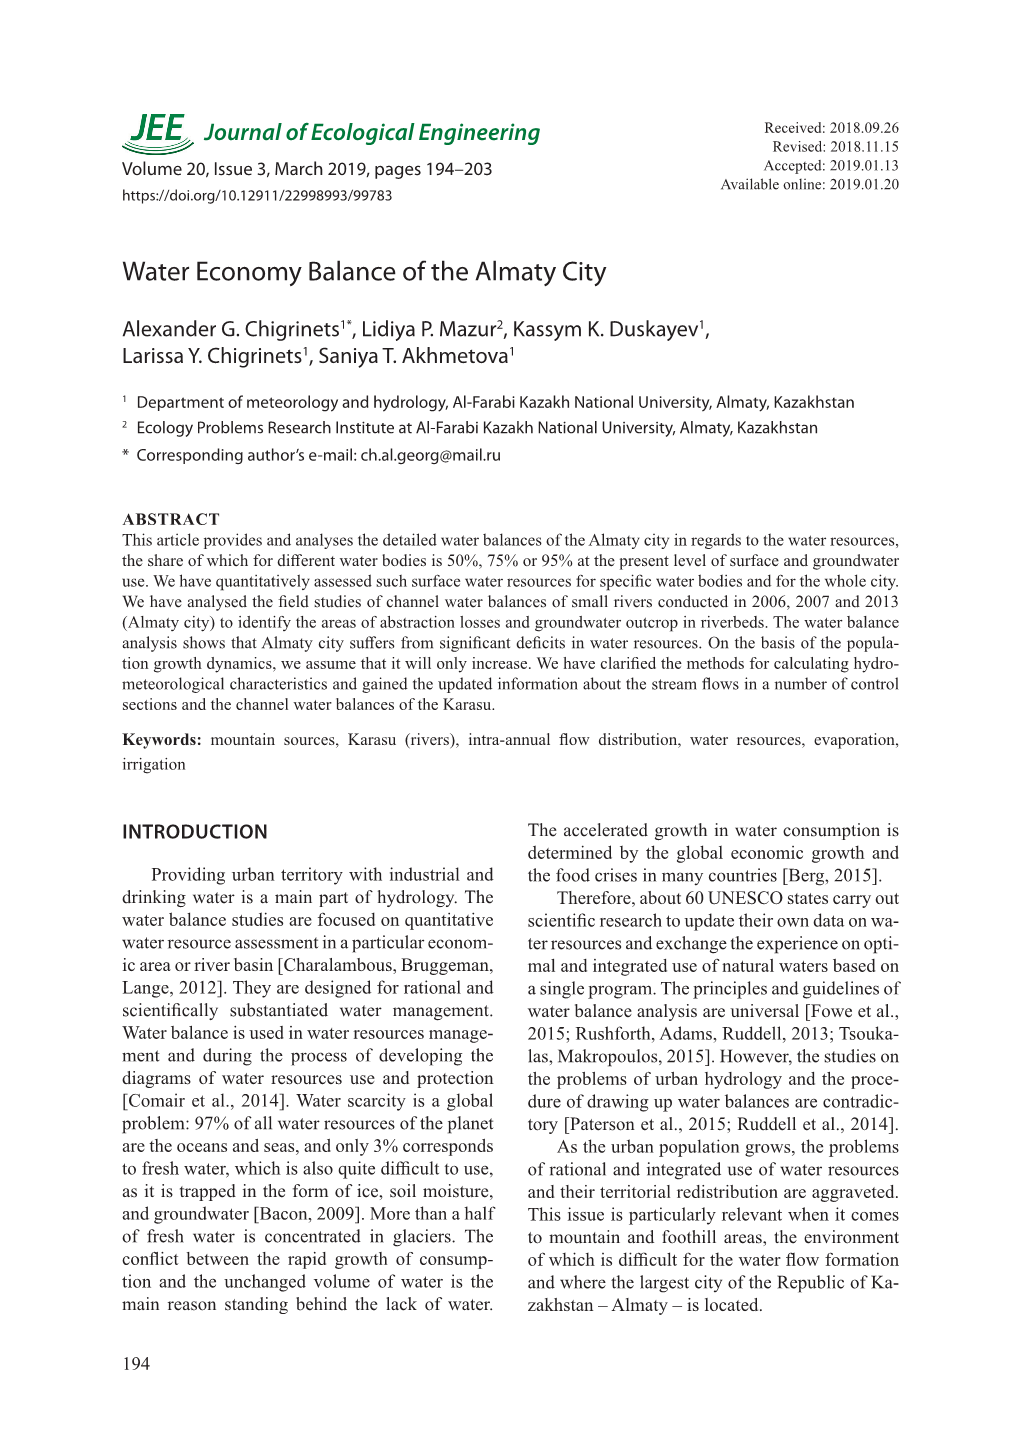 Water Economy Balance of the Almaty City